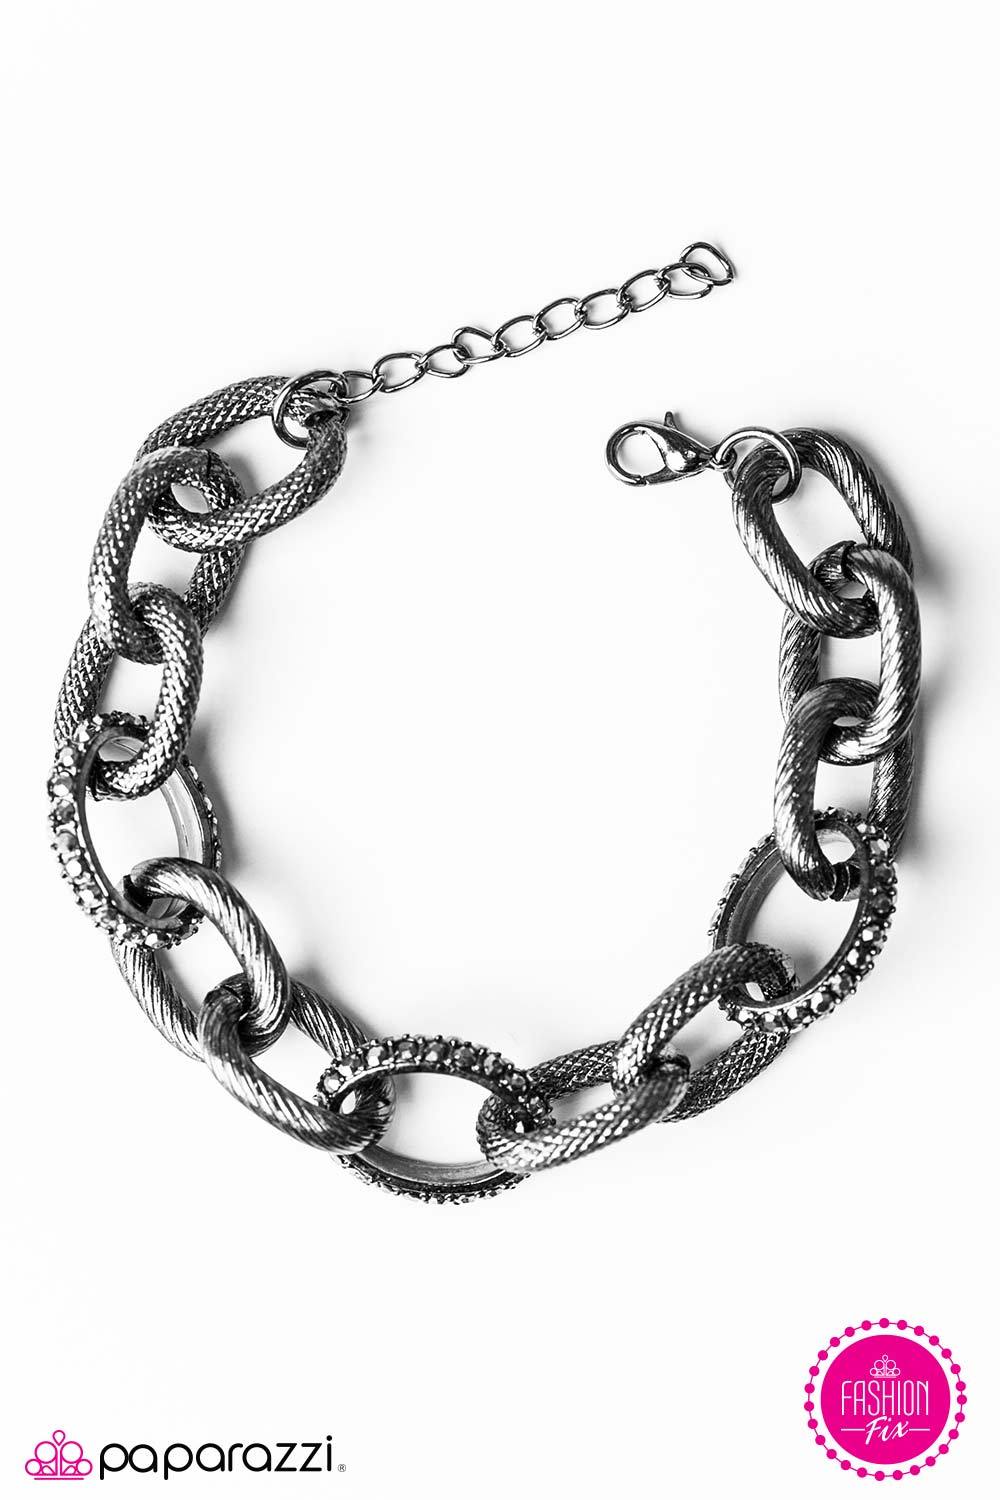 Sparkling Nights Black Bracelet - Paparazzi Accessories-CarasShop.com - $5 Jewelry by Cara Jewels